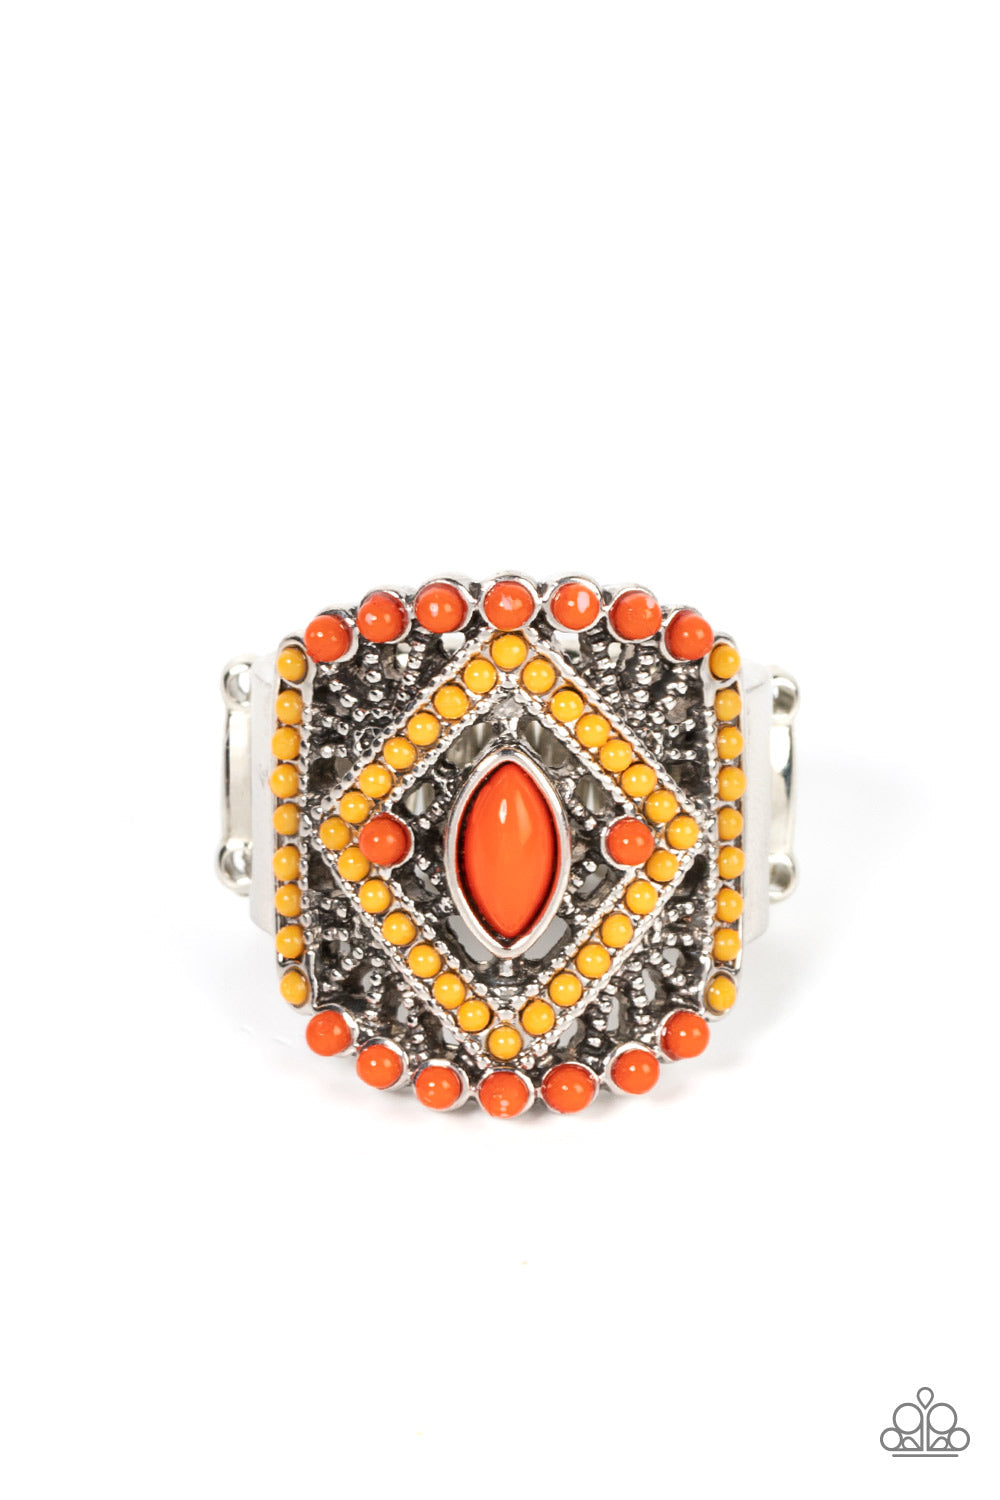 $5 Jewelry with Ashley Swint Paparazzi Written in The Star Lilies - Orange Rhinestones - Sand Dollar - Necklace & Earrings